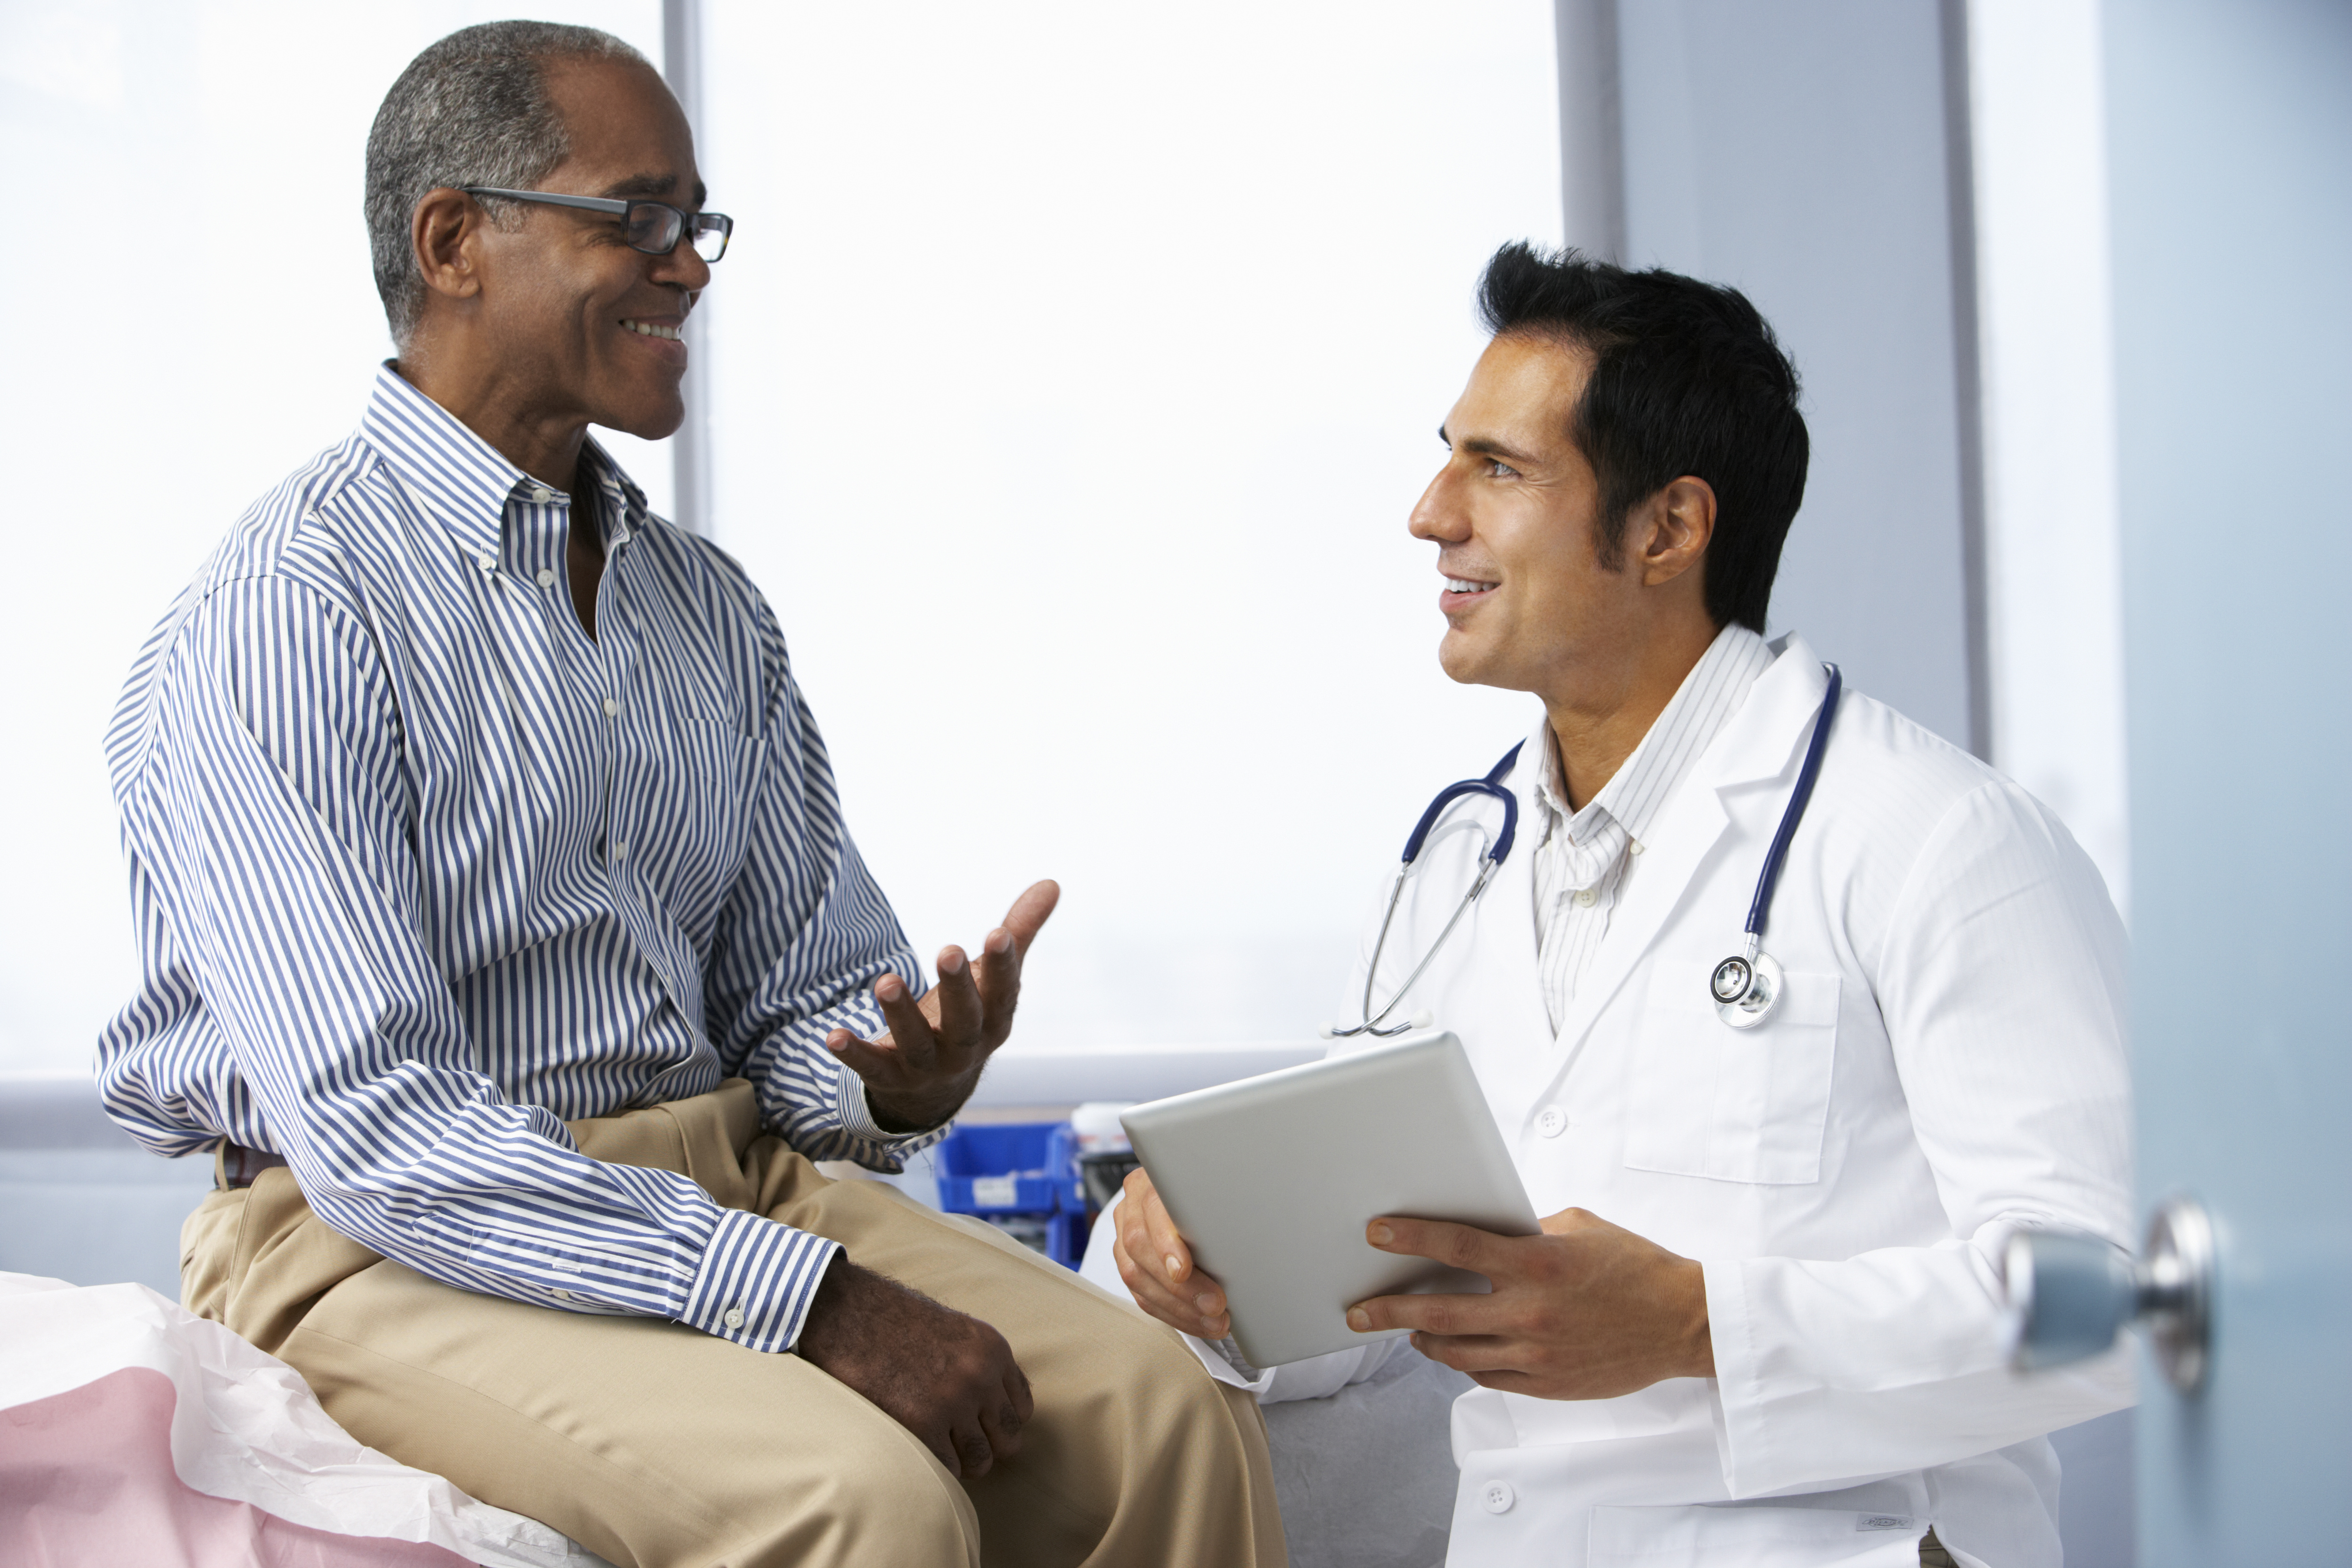 Man speaking with urologist